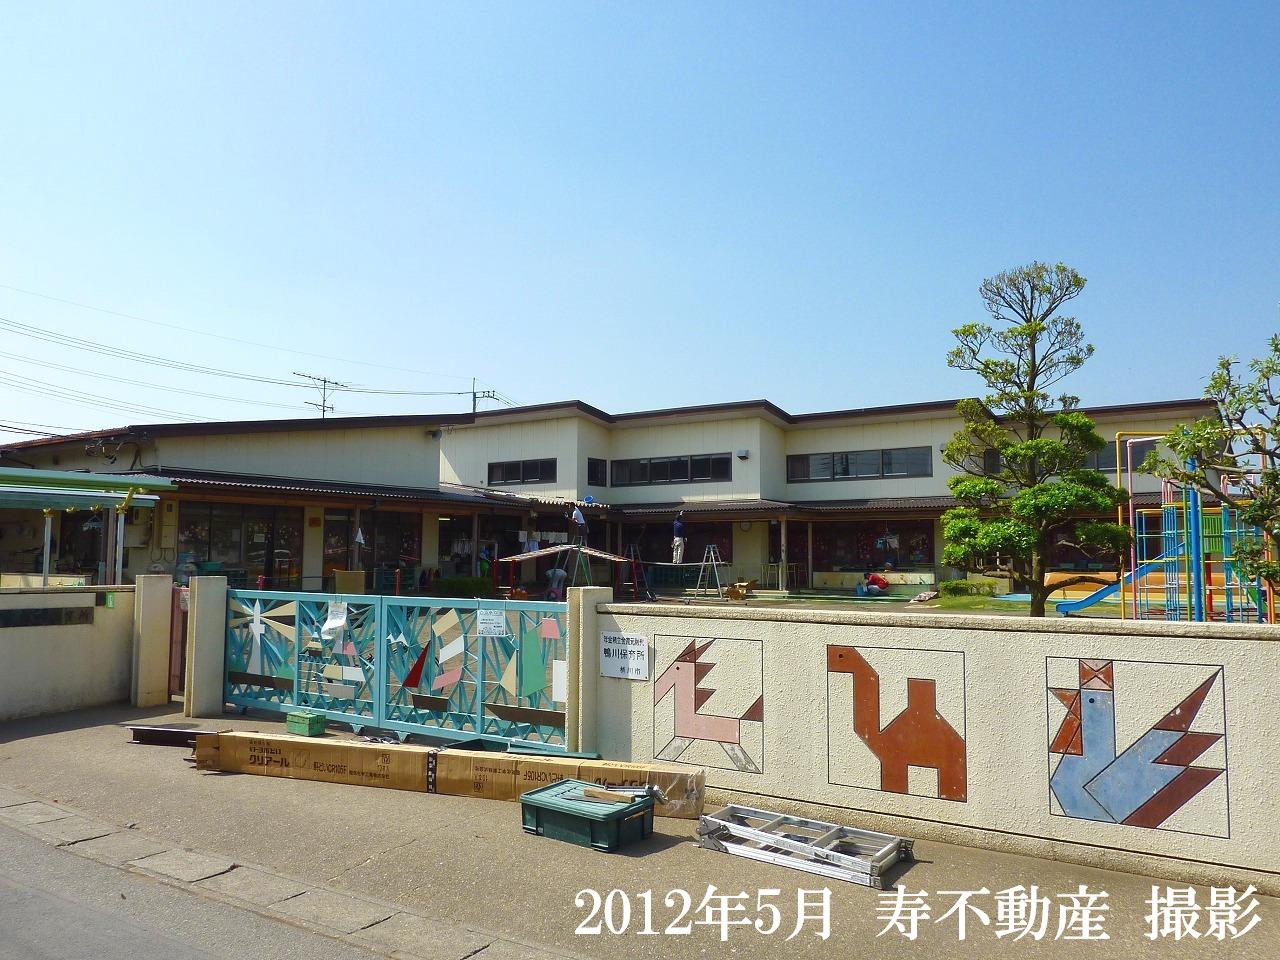 kindergarten ・ Nursery. Okegawa Kamogawa nursery school (kindergarten ・ 442m to the nursery)